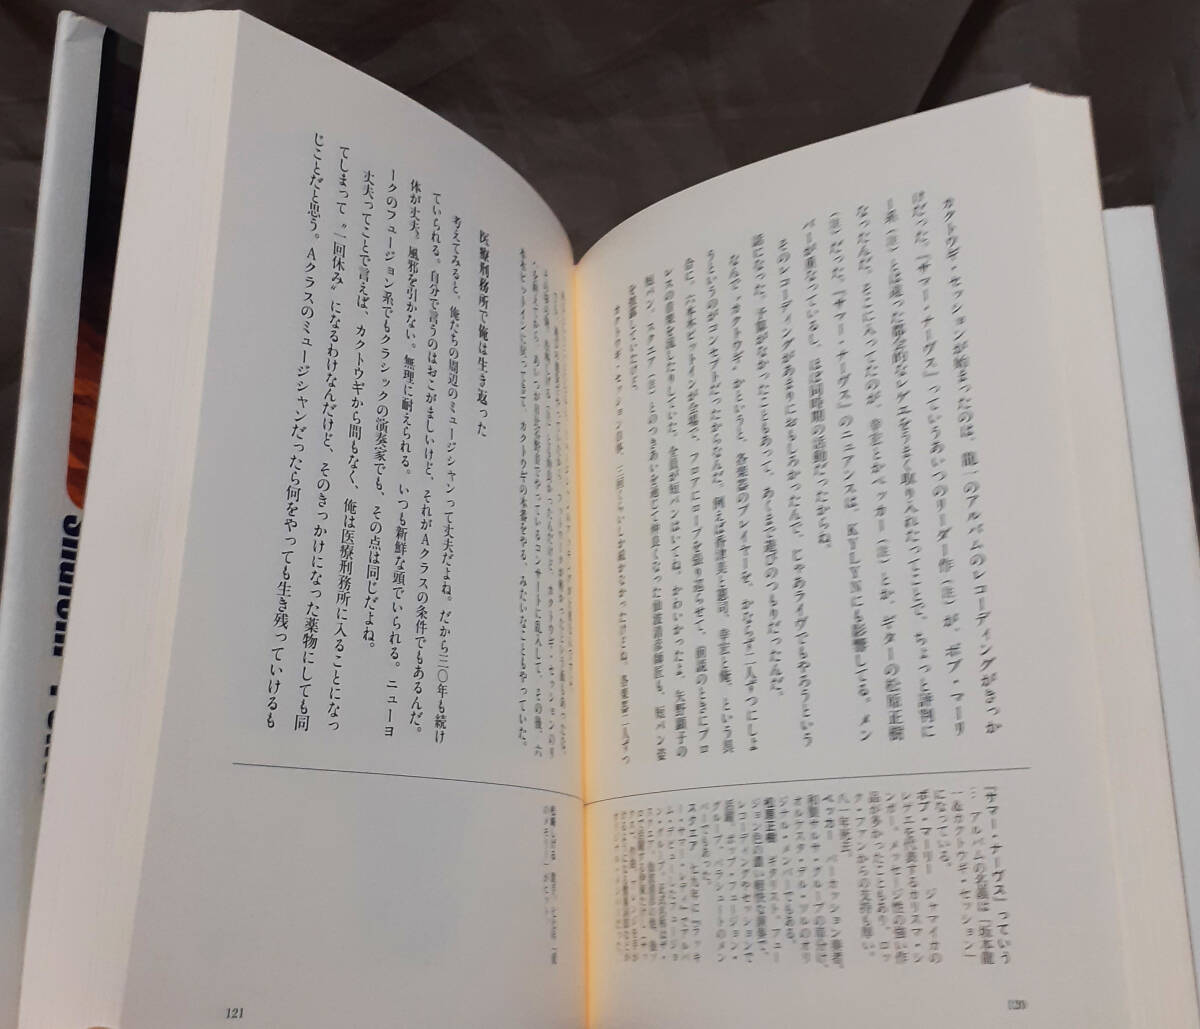  self . autobiography ponta. one 9 7 two - two 00 three Murakami ~ponta~ preeminence one : work Bungeishunju separate volume 